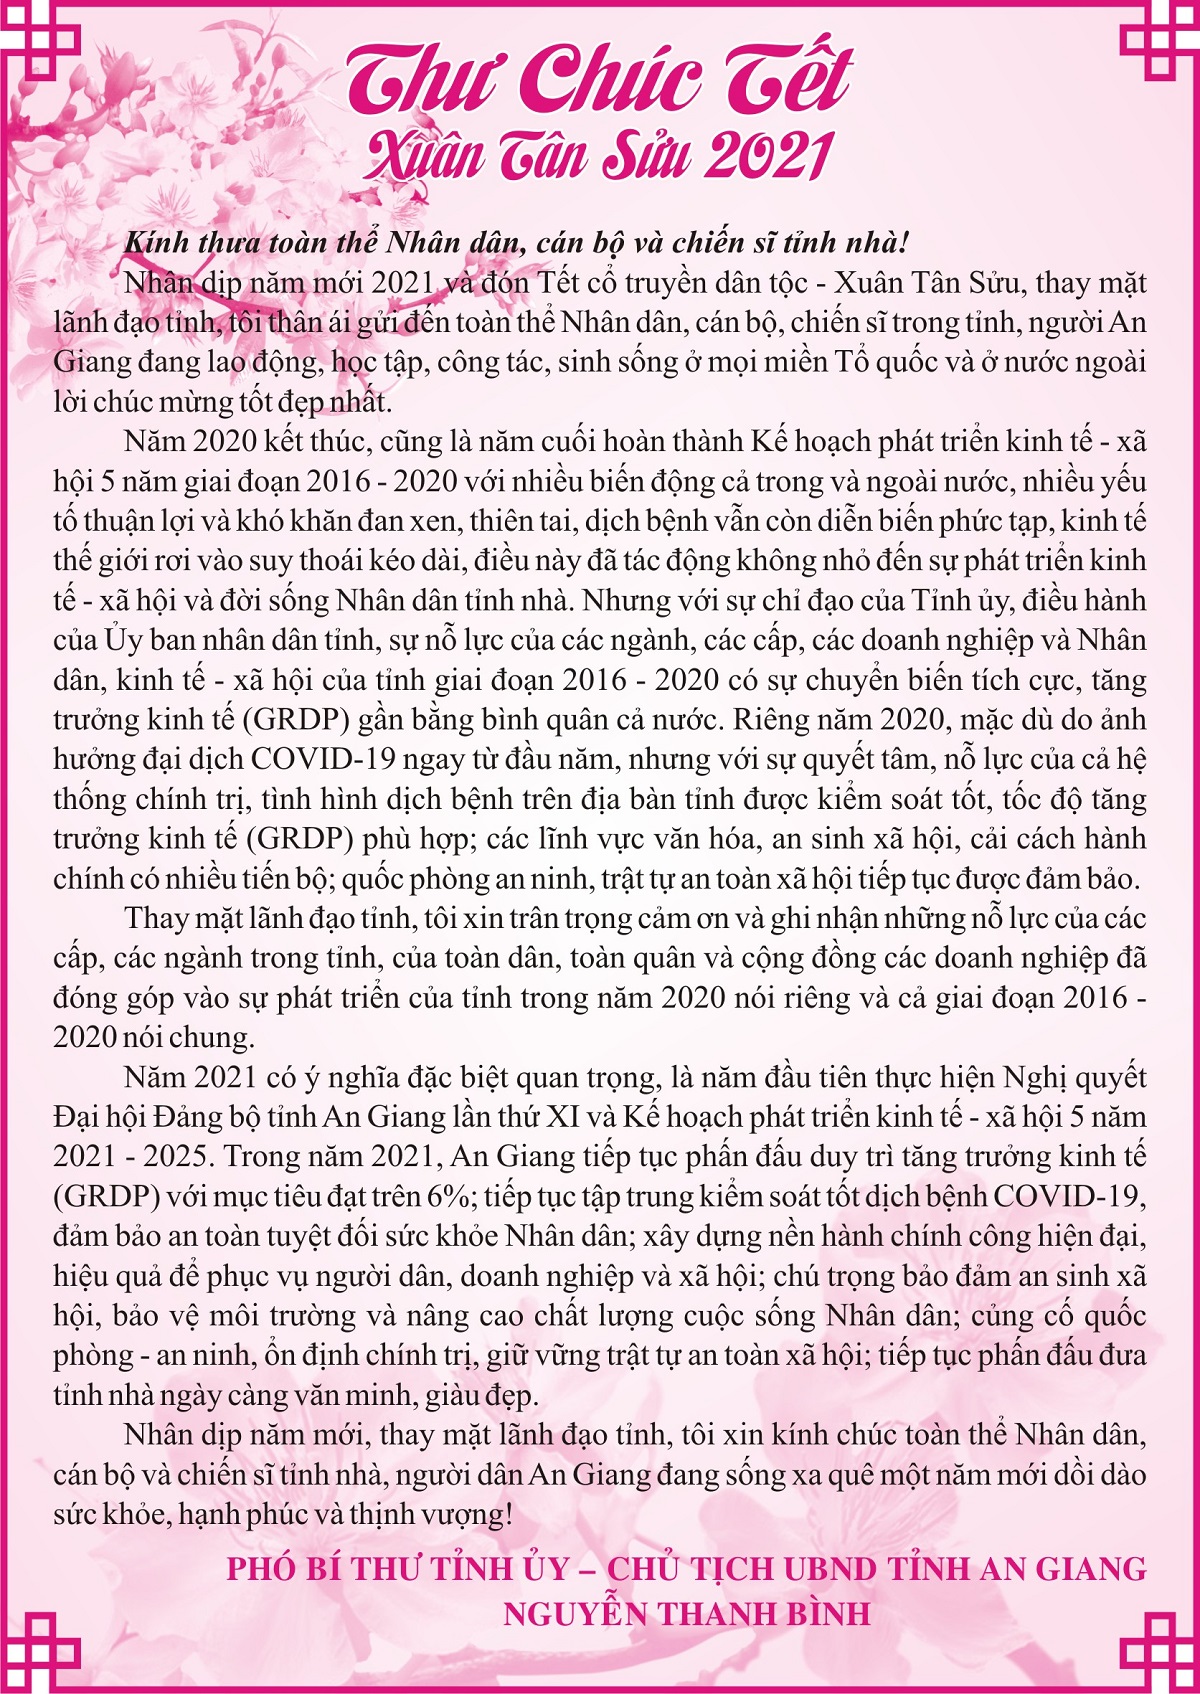 Thu Chuc Tet Tan Suu 2021.jpg